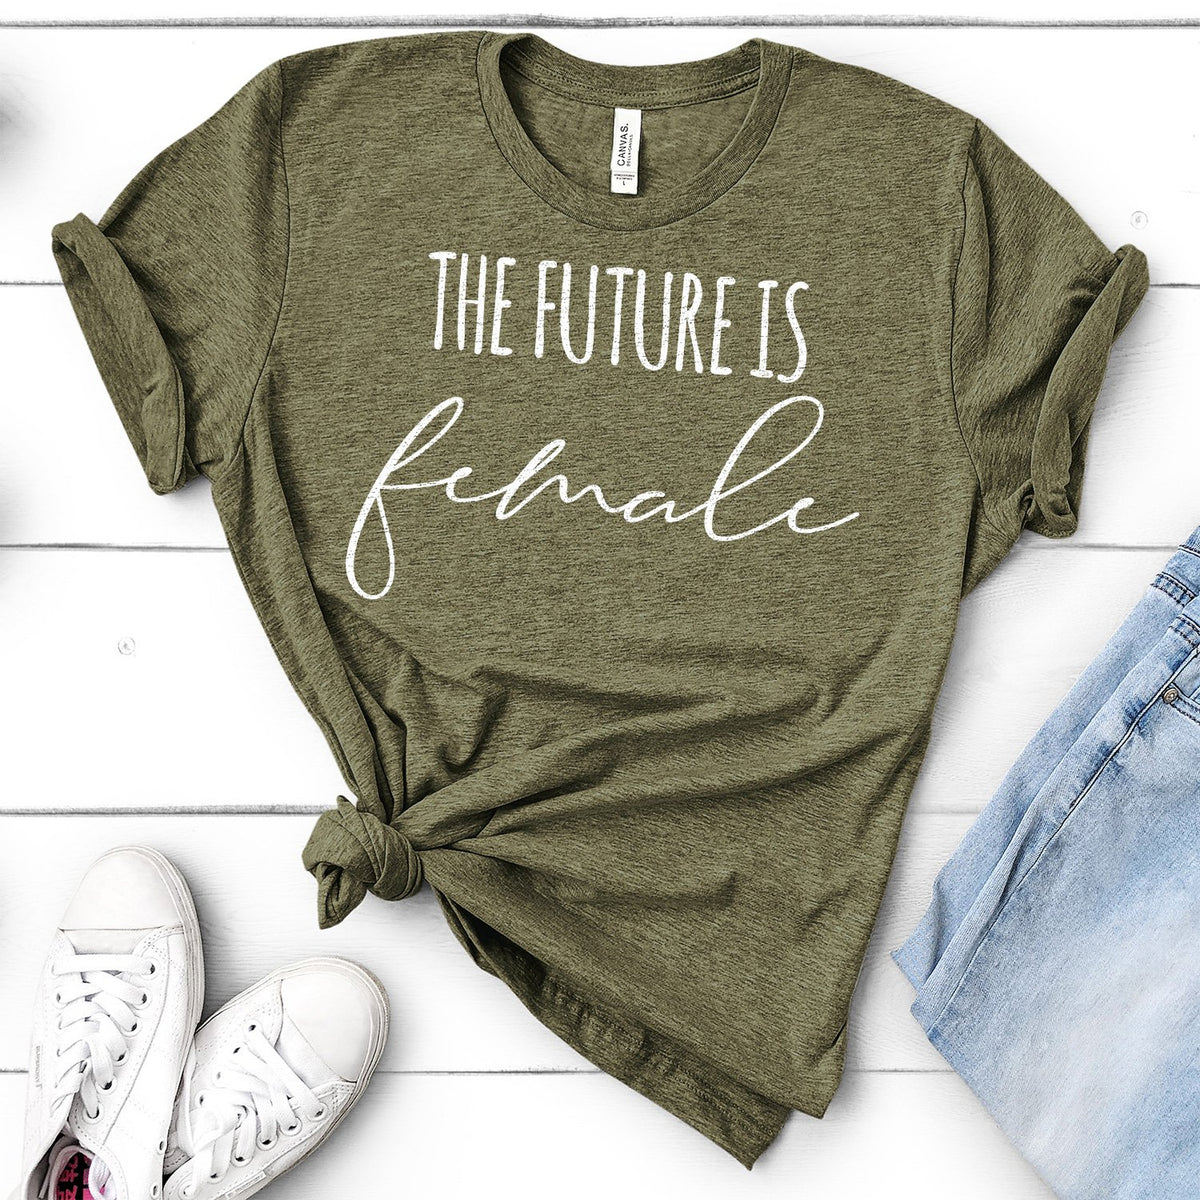 The Future is Female - Short Sleeve Tee Shirt